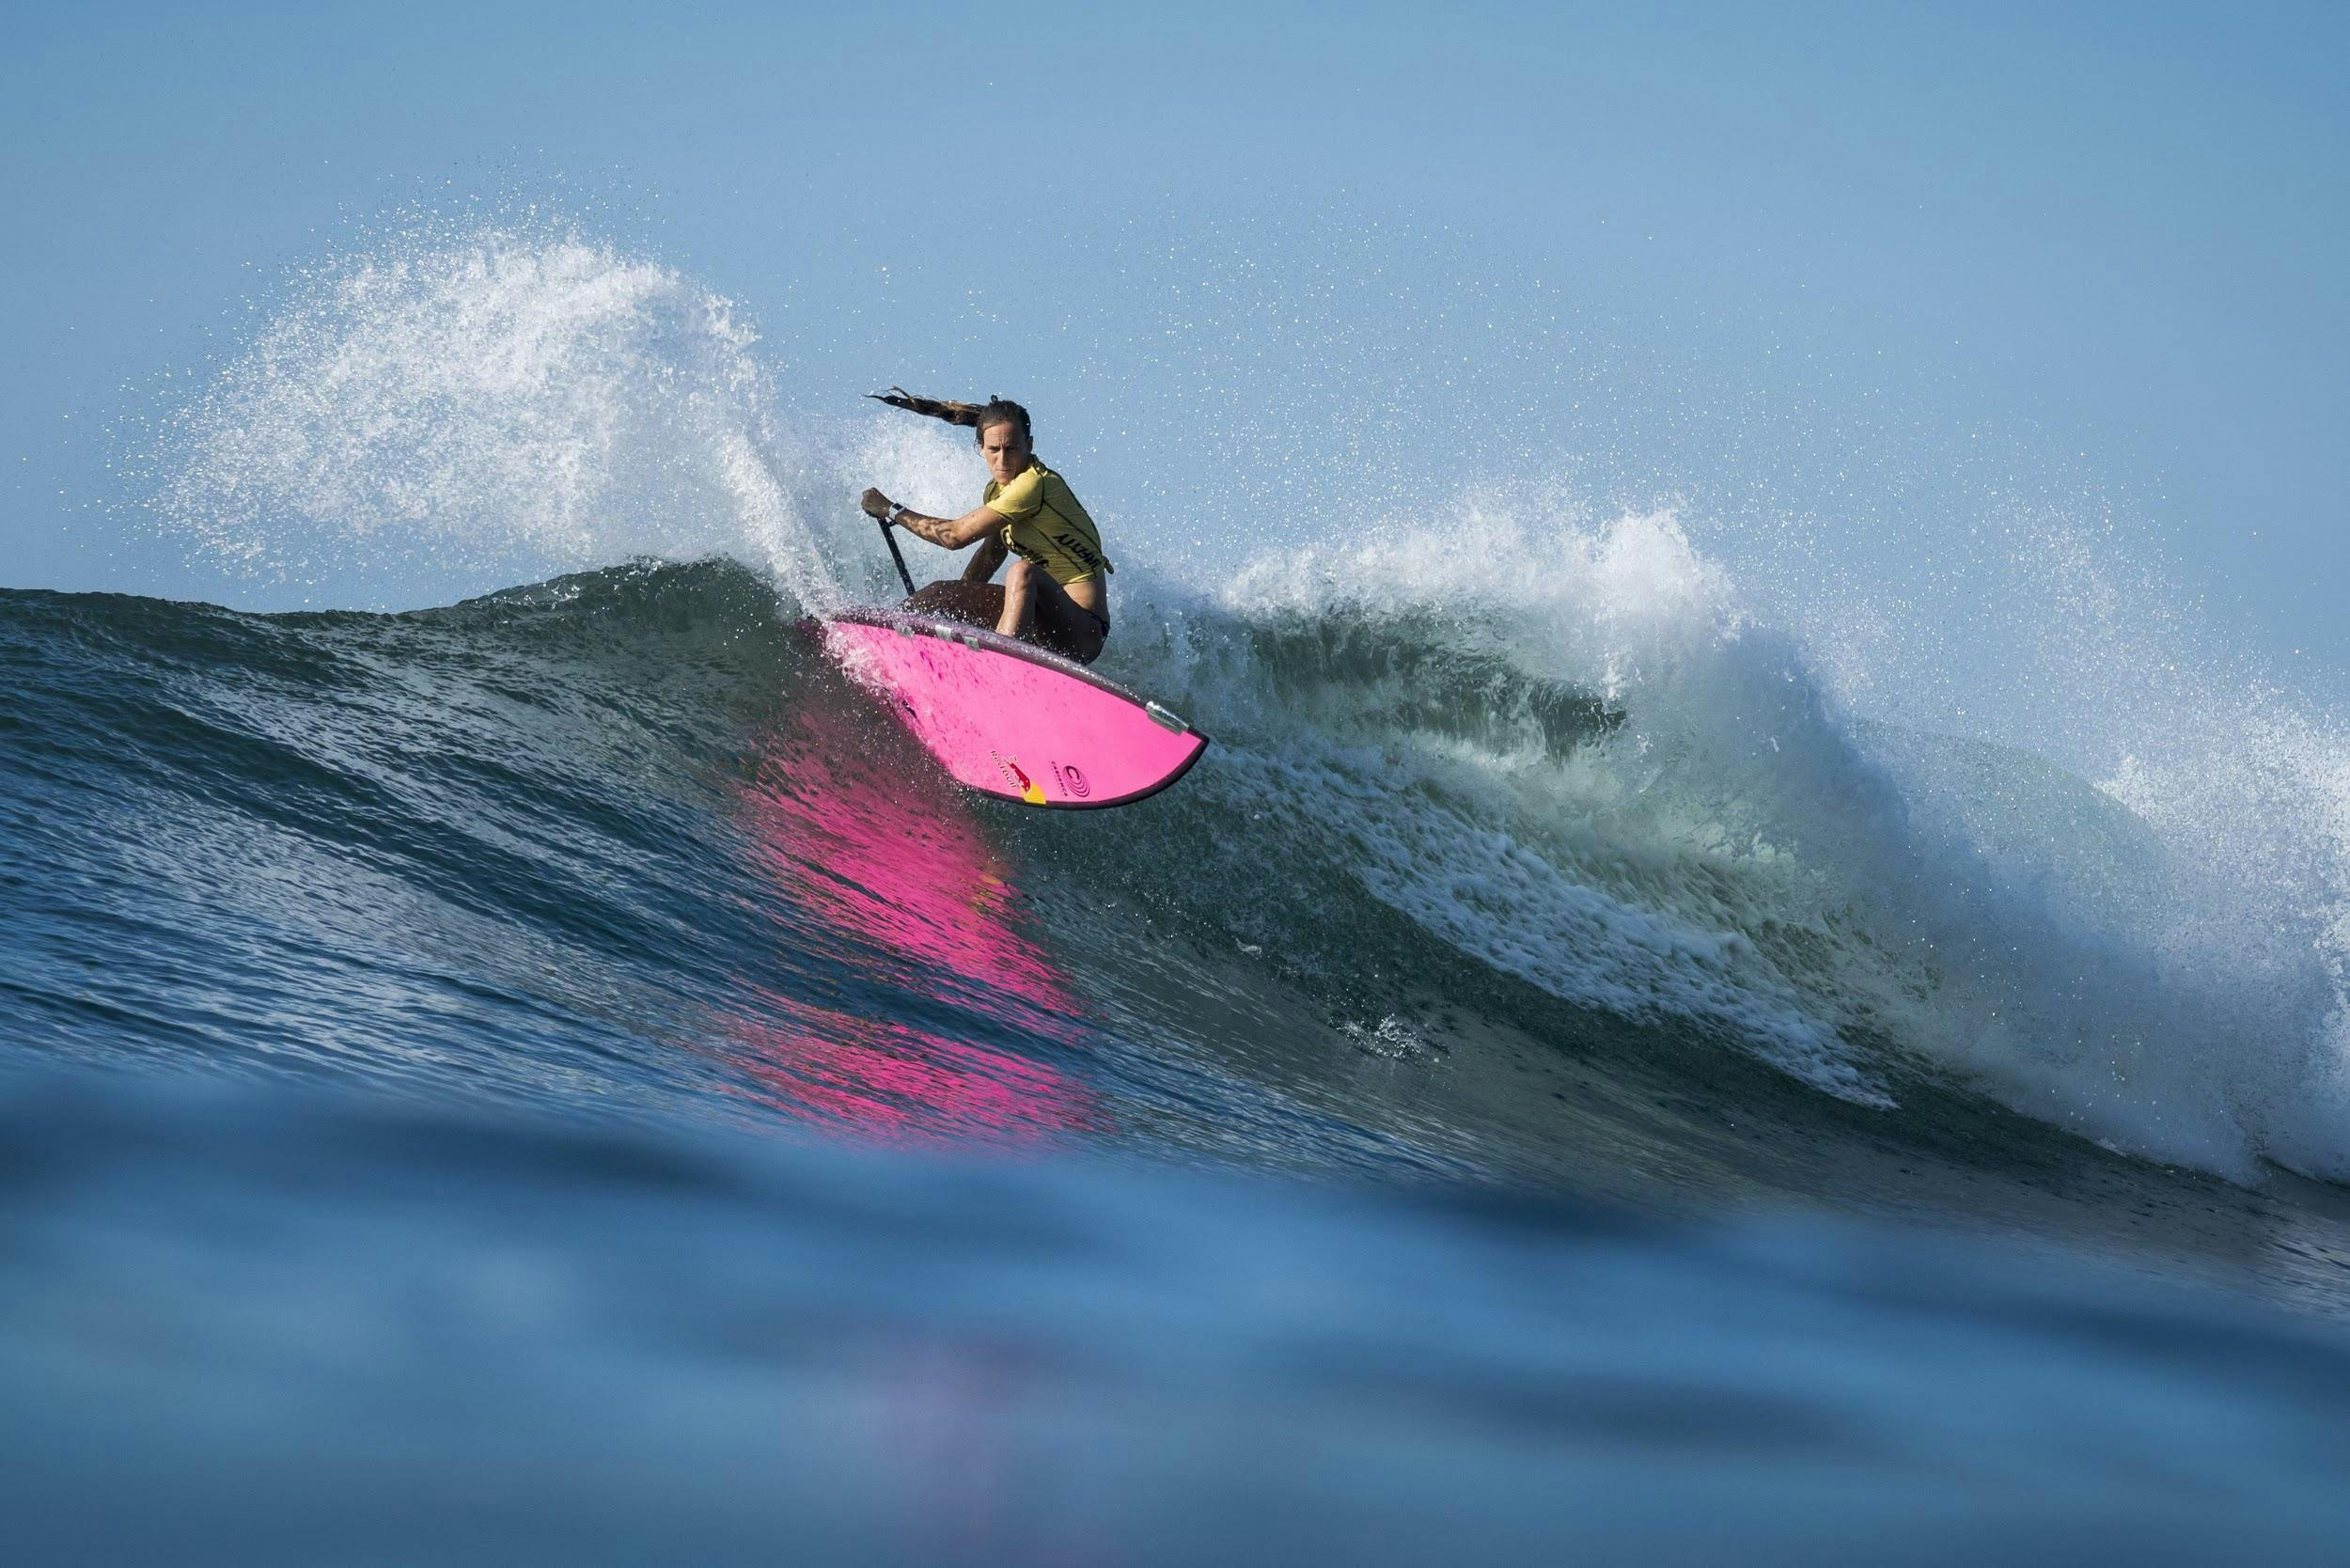 Surf City El Salvador worldclass surfers ride waves to raise